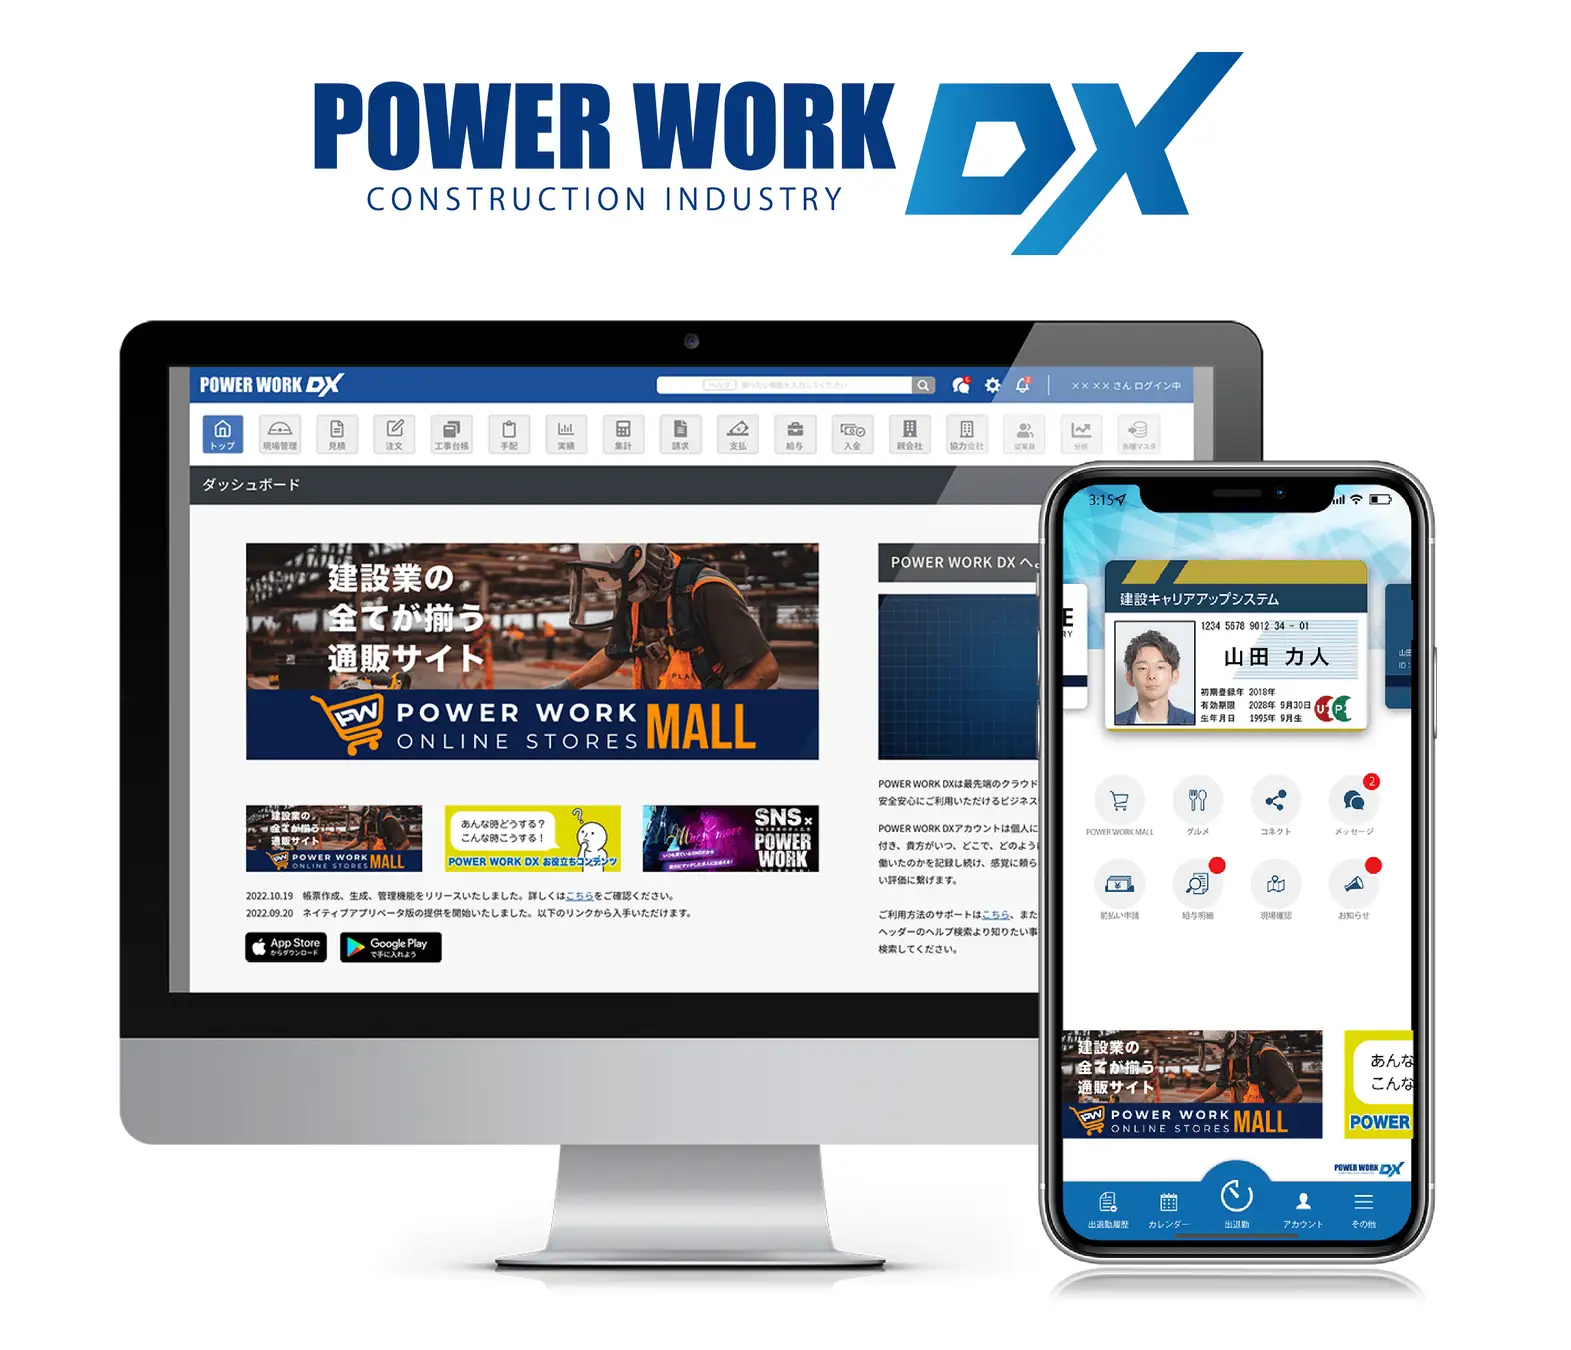 POWER WORK DXトップ画面イメージ